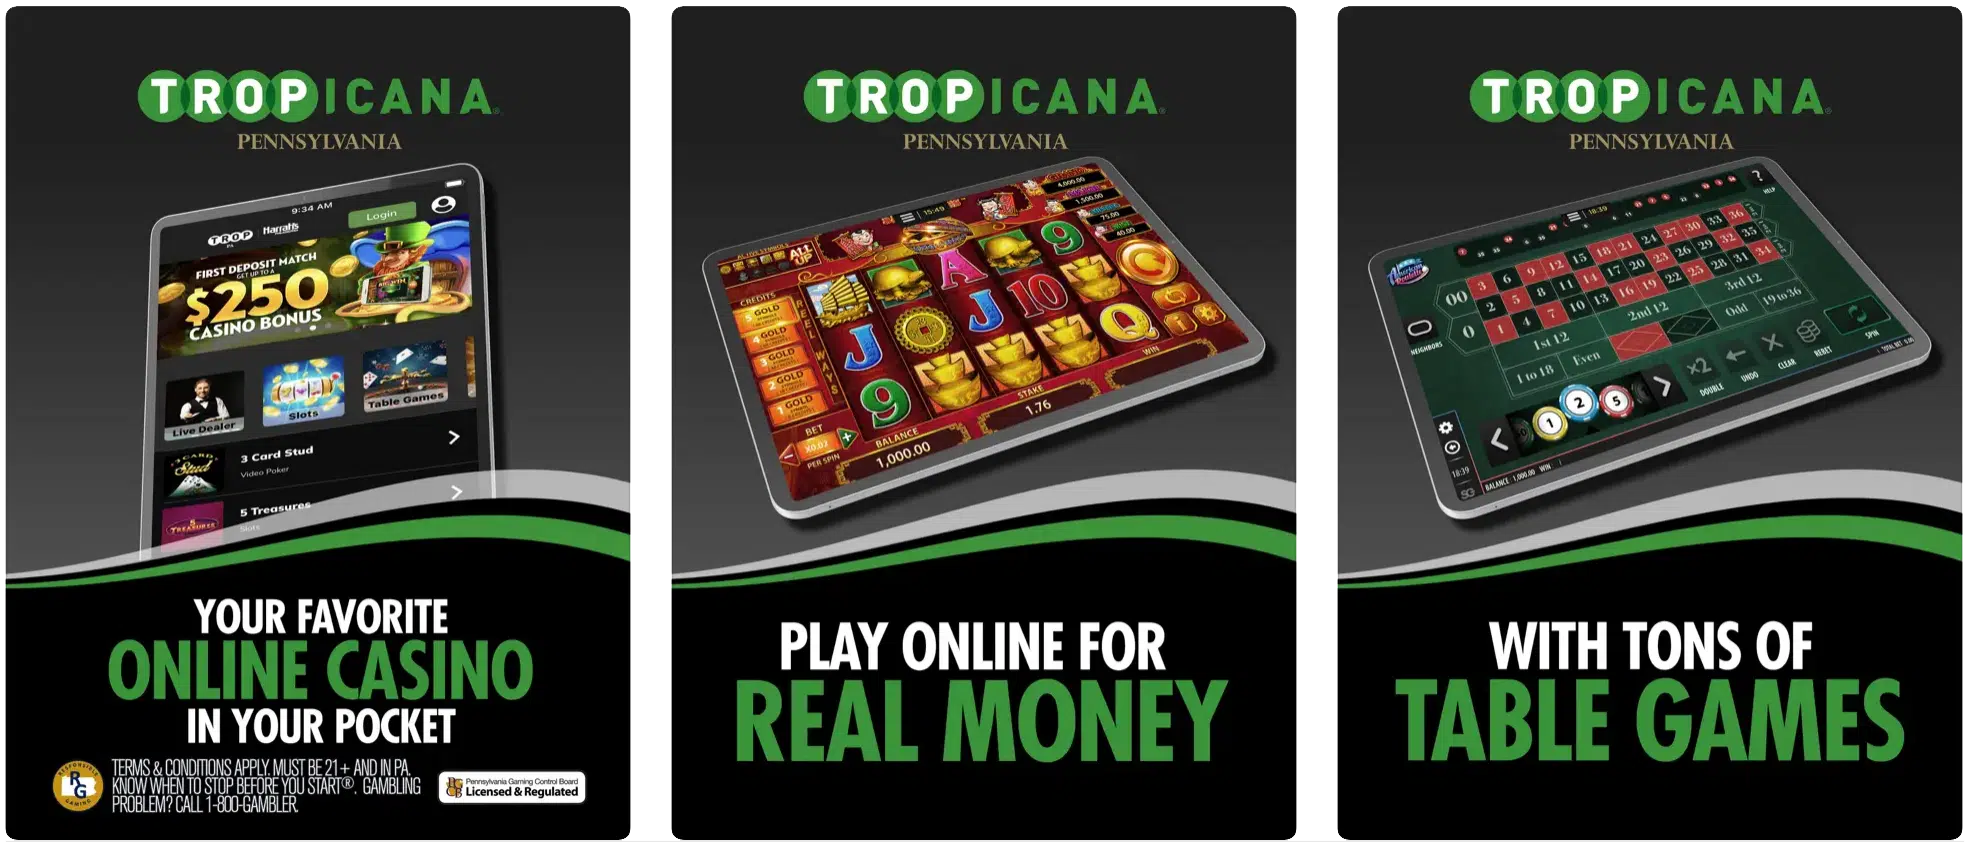 Tropicana Casino PA, App Store Screenshot